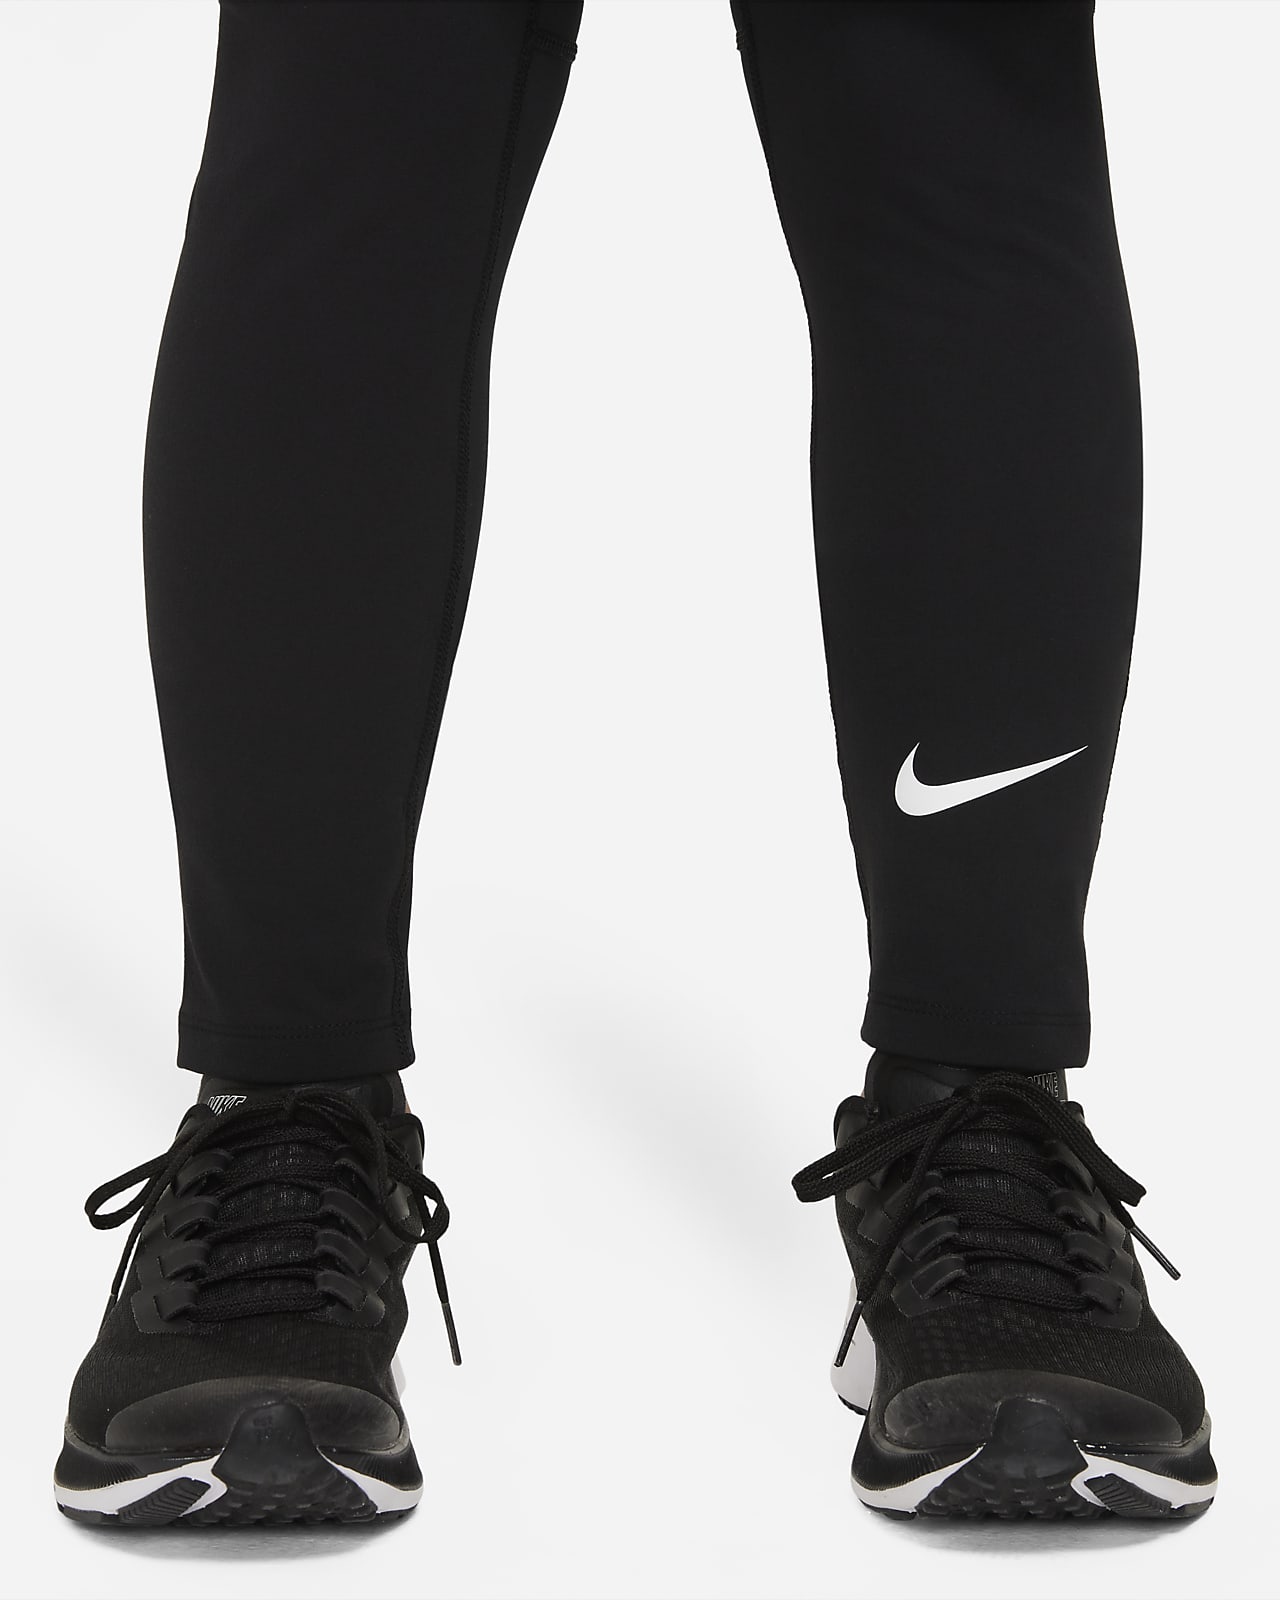 Nike Pro Warm Erkek Çocuk Tayt